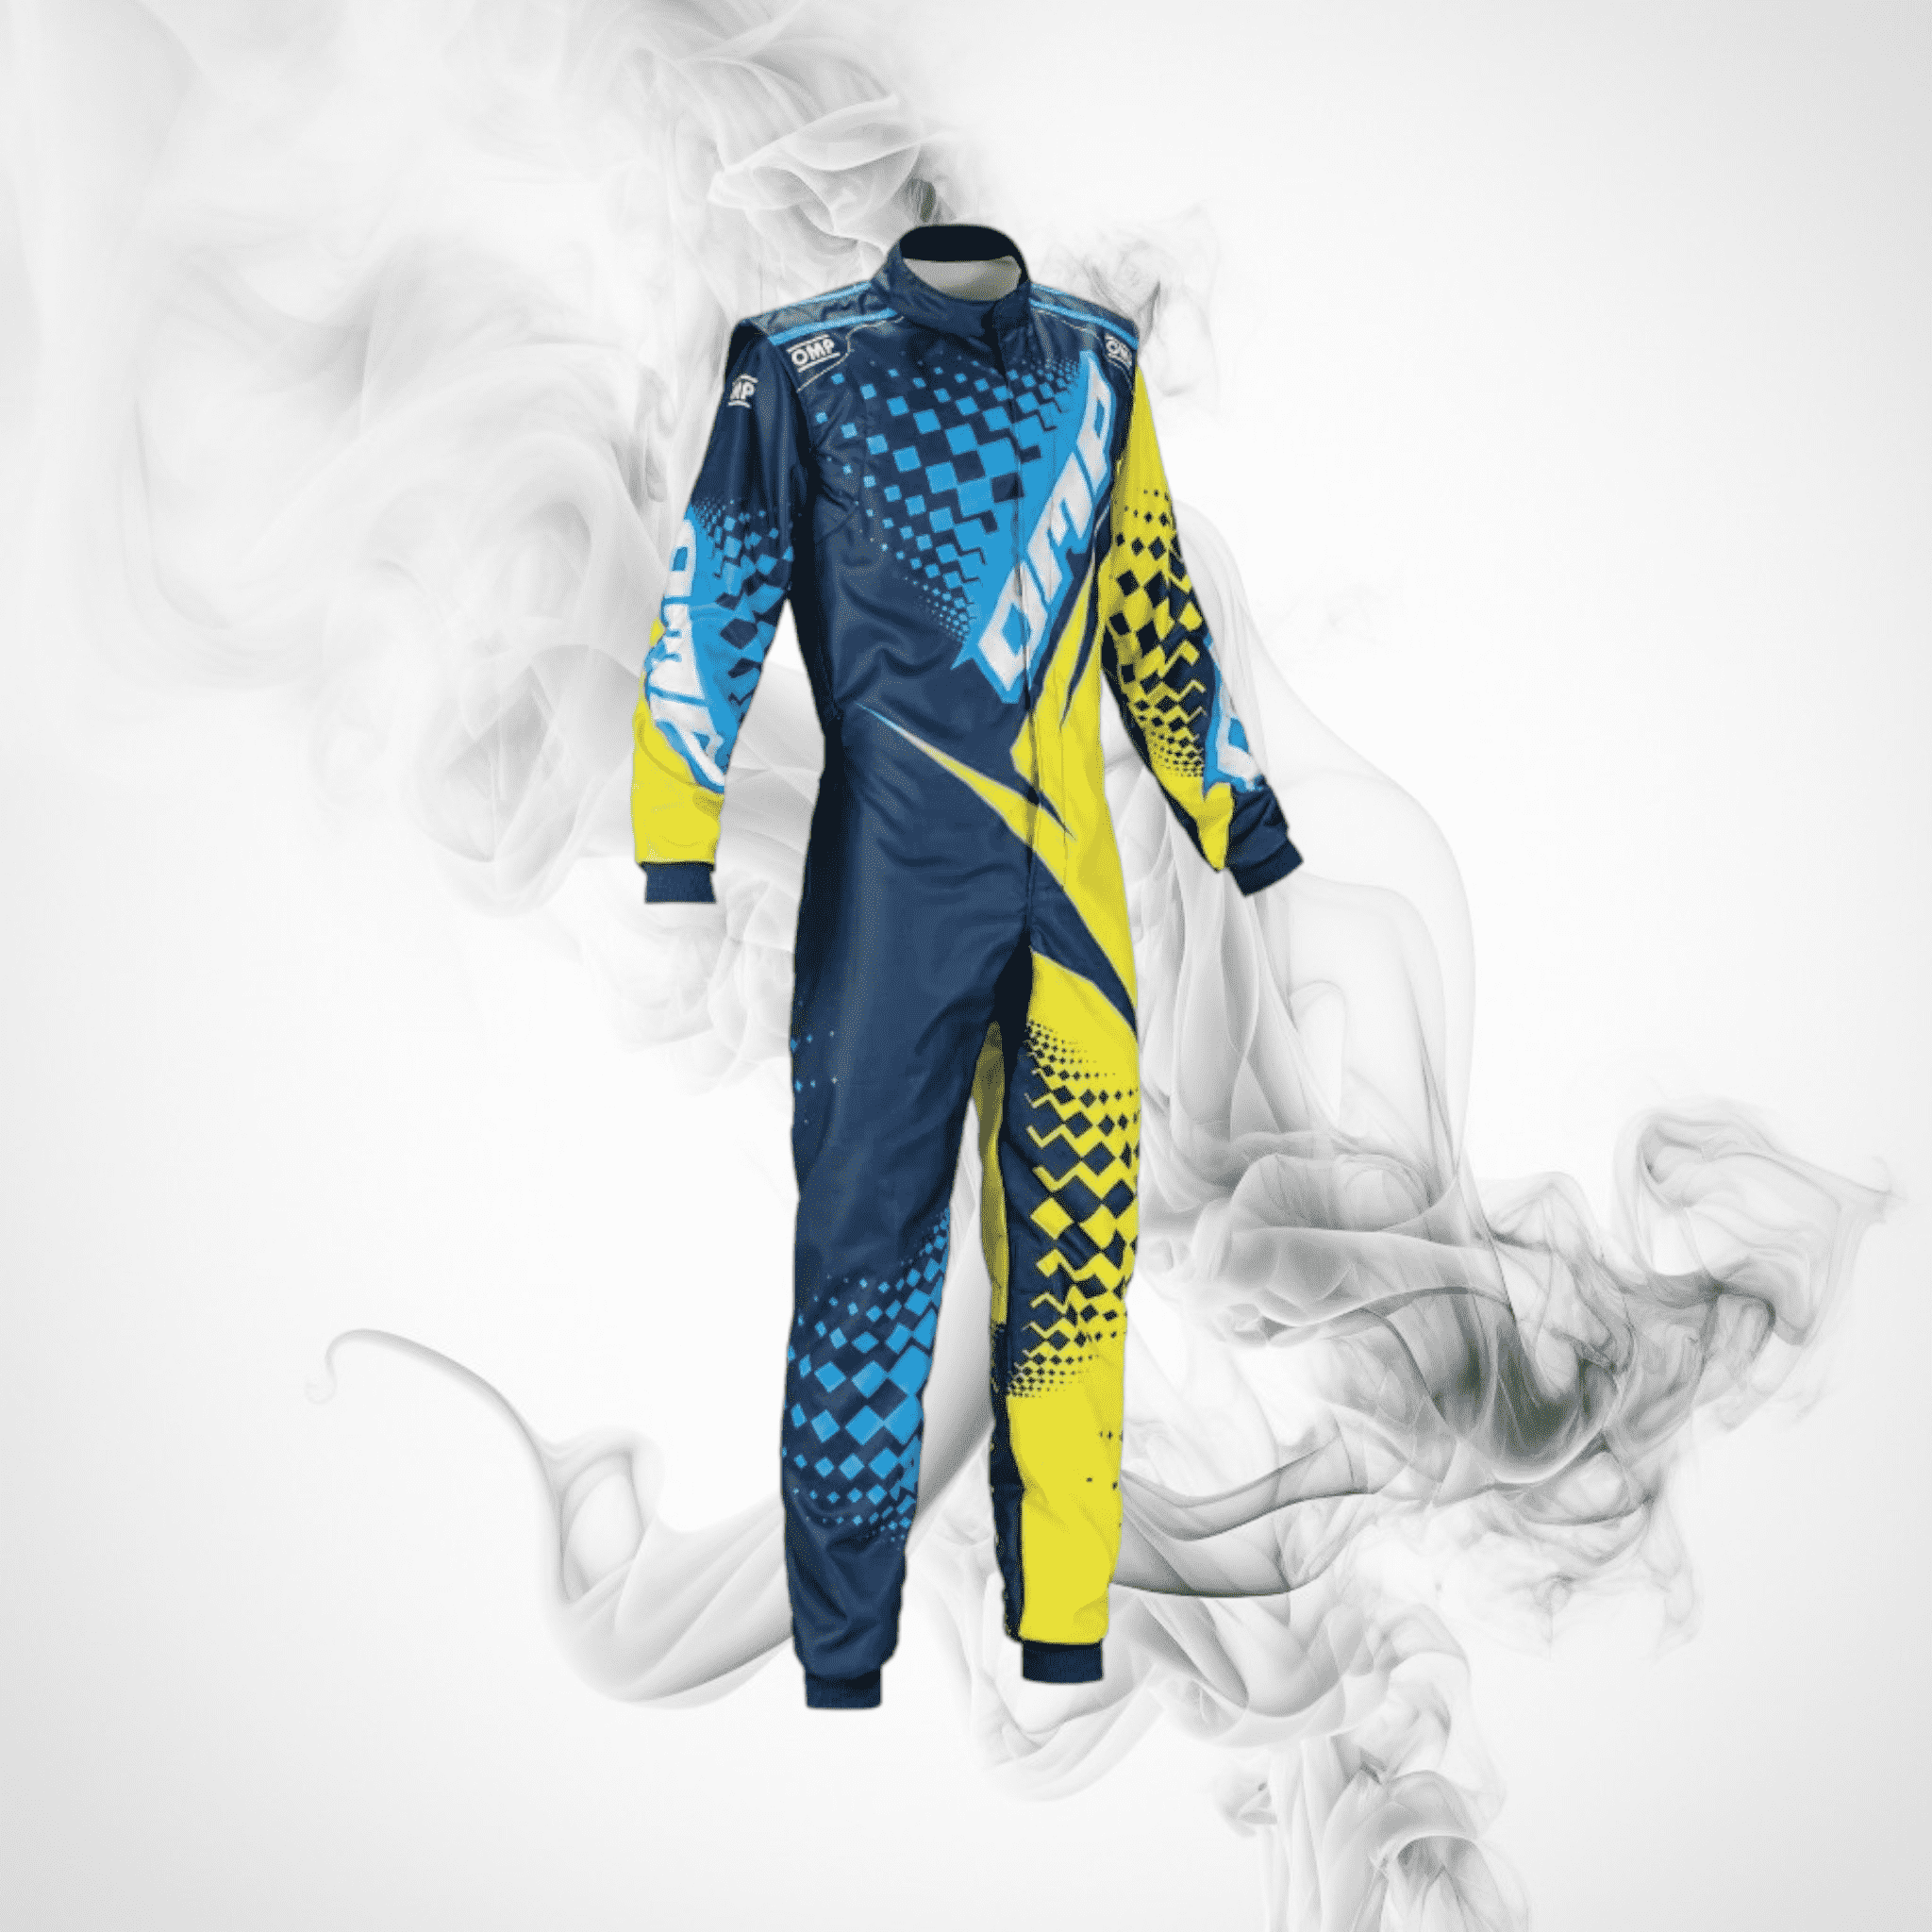 omp-ks-2r-kart-racing-suit-dash-racegear-karting-suit-kart-suit-omp-omp-suit-1